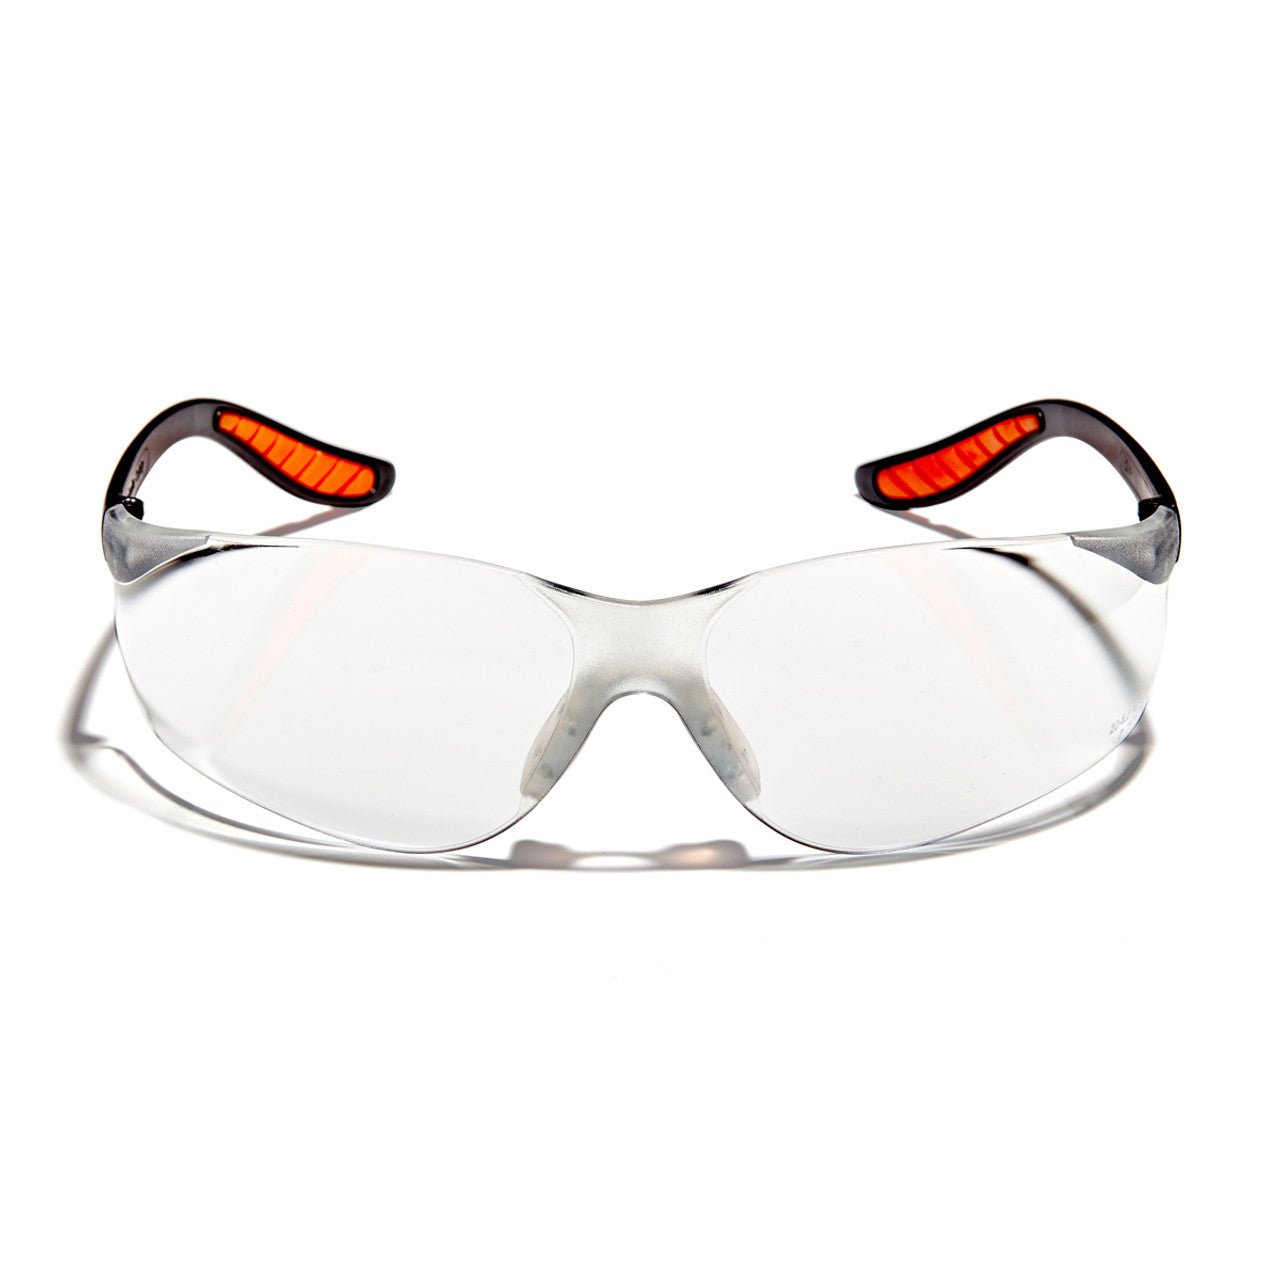 OPTIFENSE™ VS2 CLEAR Safety Glasses, ANSI Z87+, 12PCS - Defender Safety